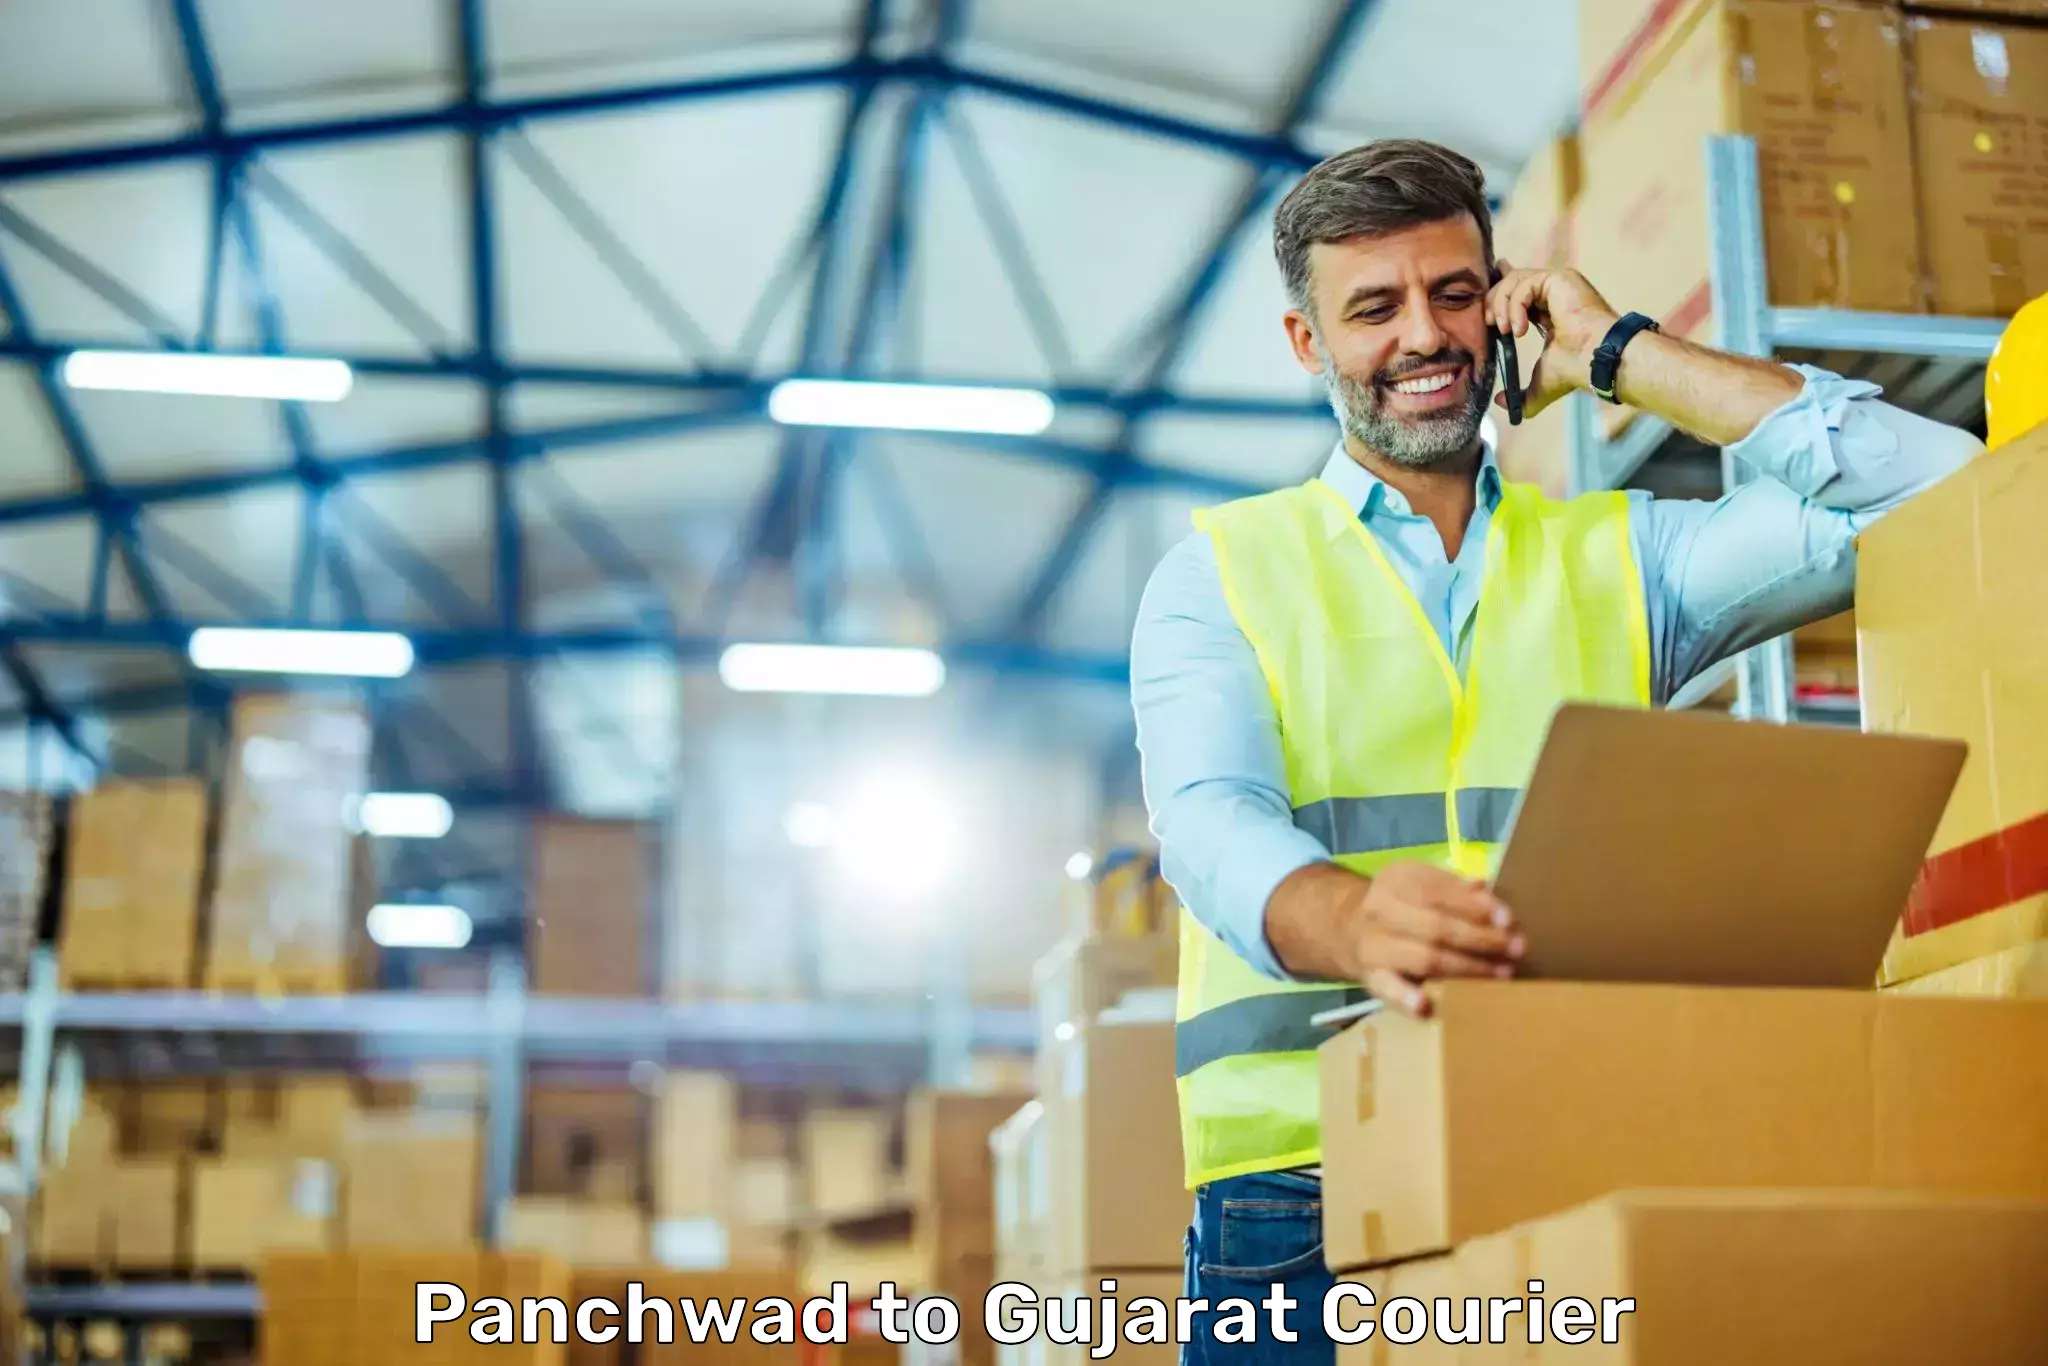 Courier service comparison Panchwad to Tarapur